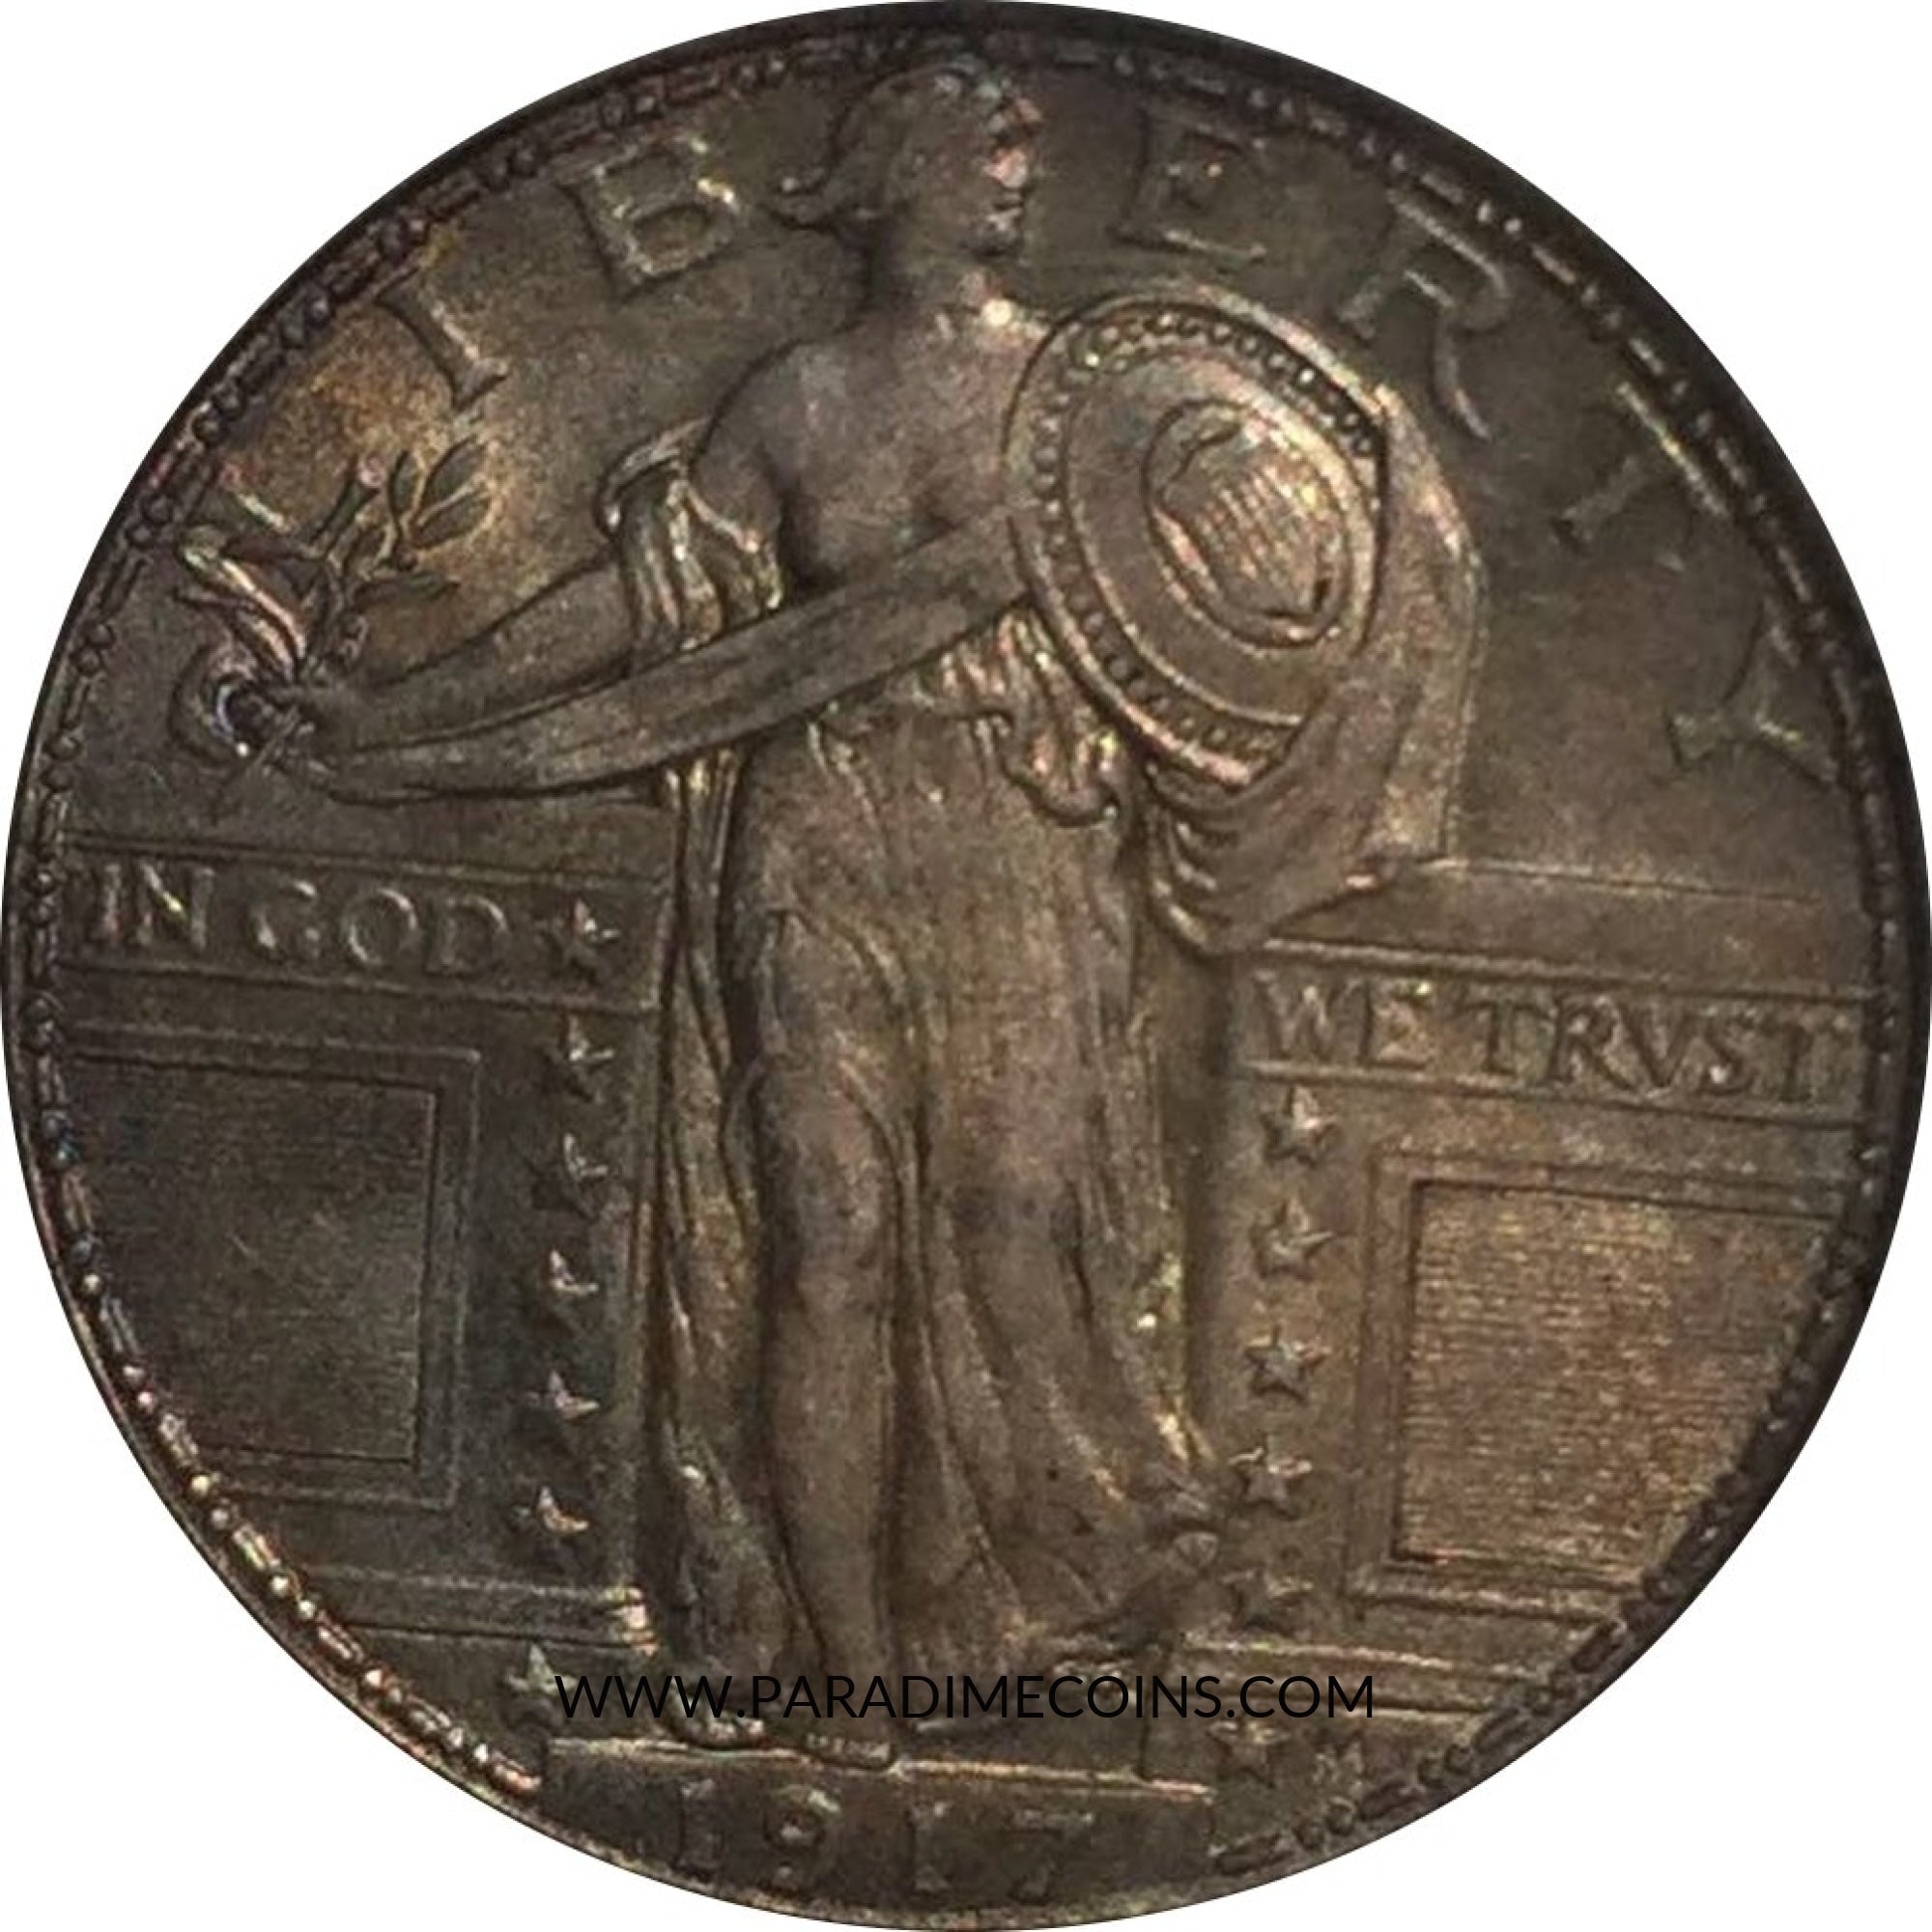 1917 T-1 25C AU58 FH NGC. - Paradime Coins | PCGS NGC CACG CAC Rare US Numismatic Coins For Sale